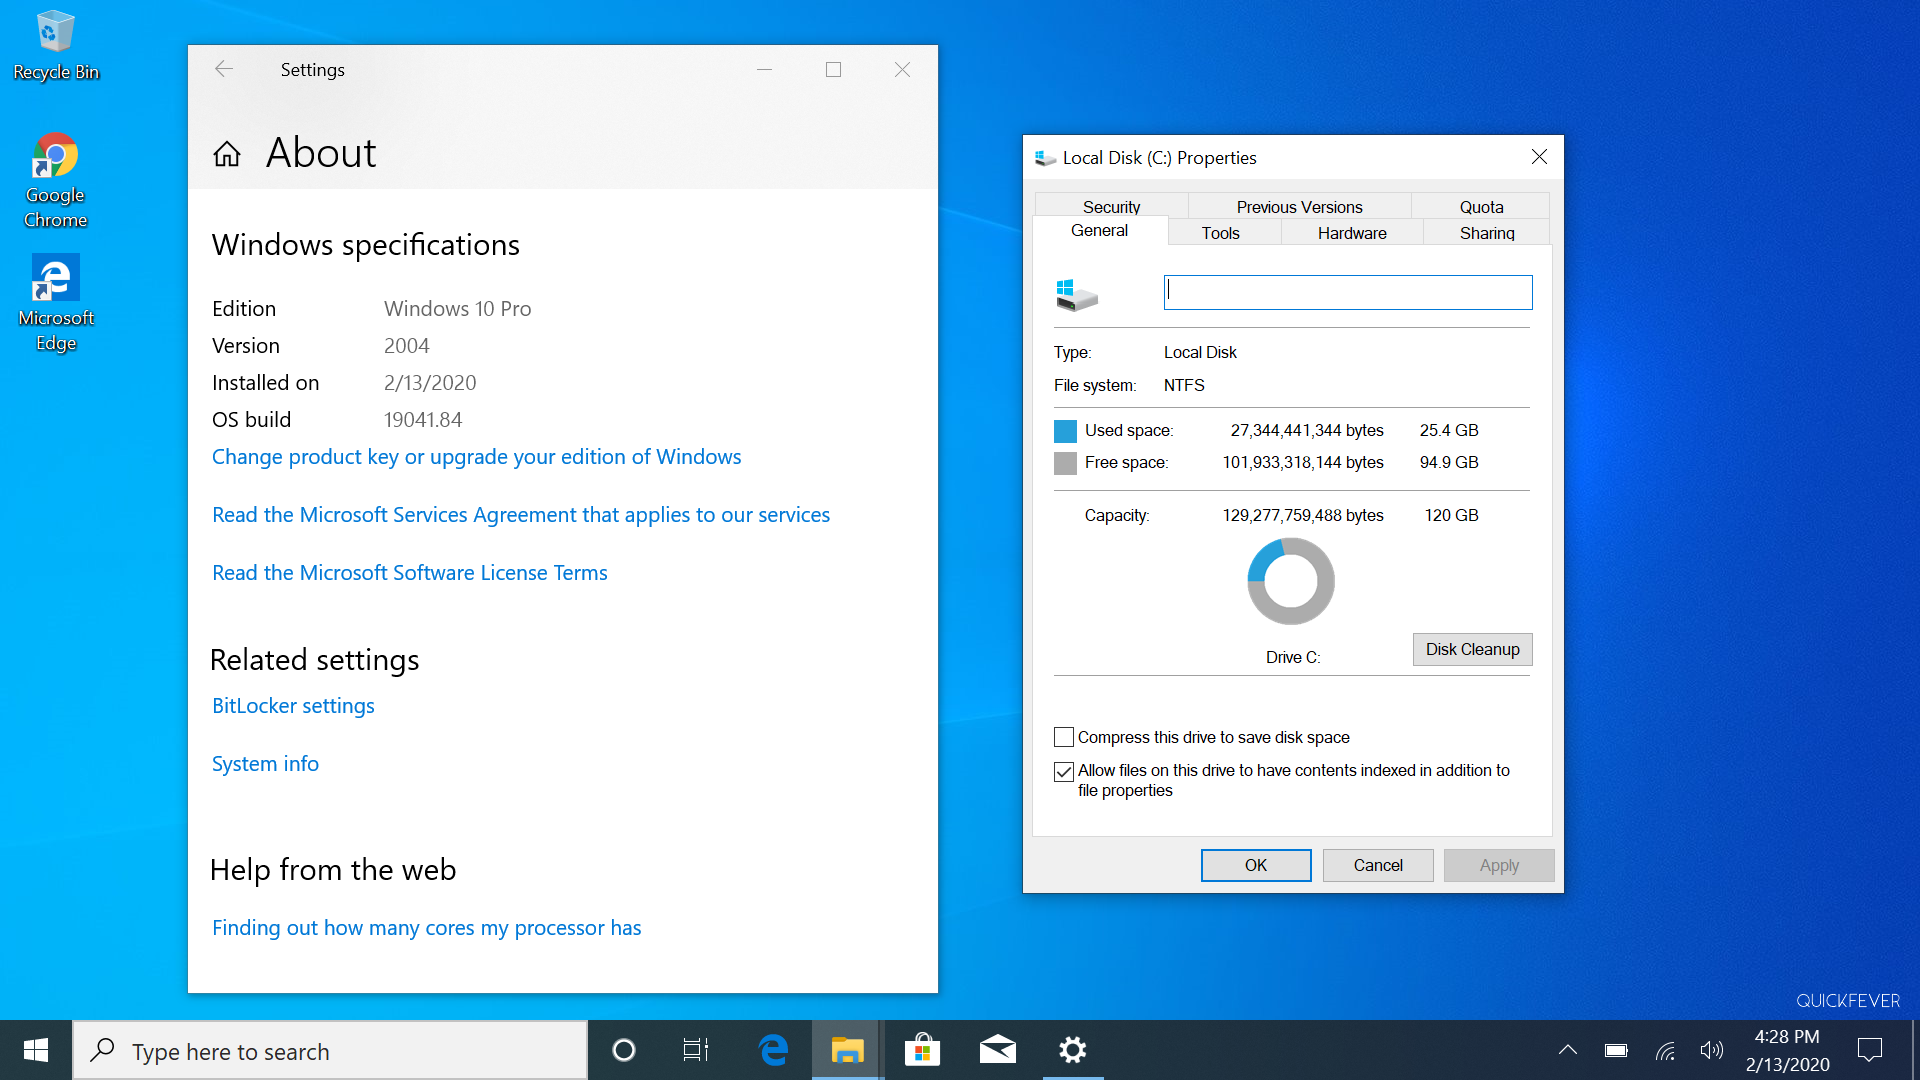 windows 10 install size ssd